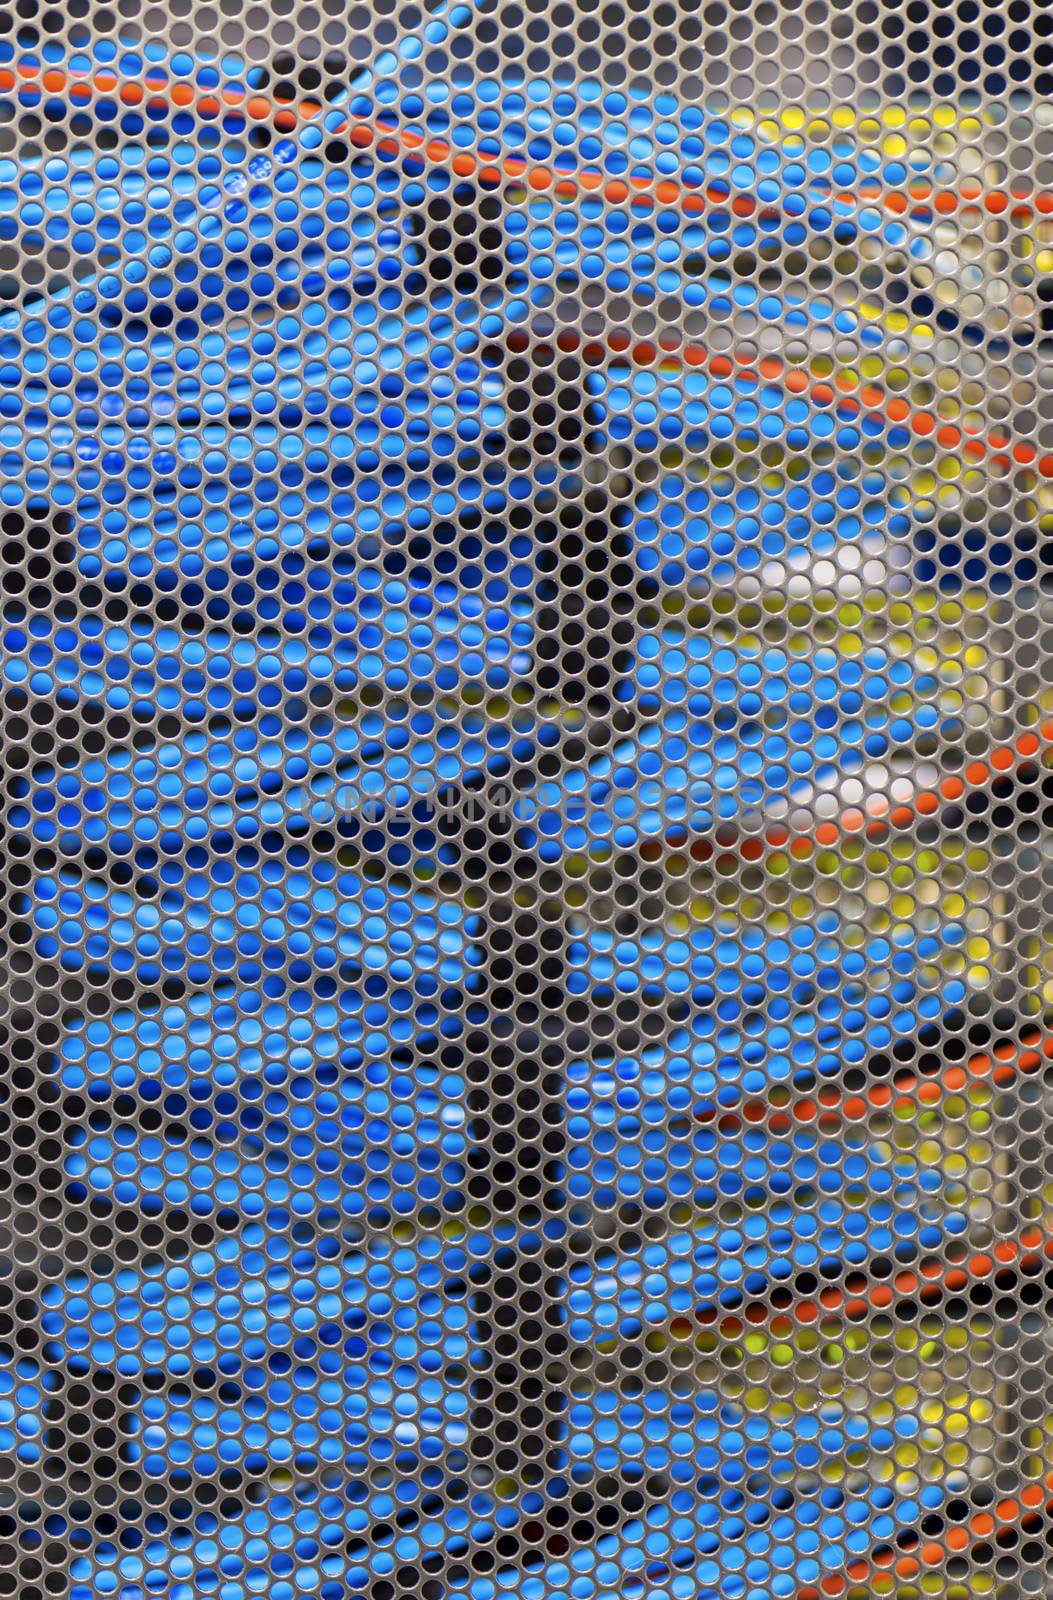 Lan cable in Cambridge Server Rack, foucs on the door